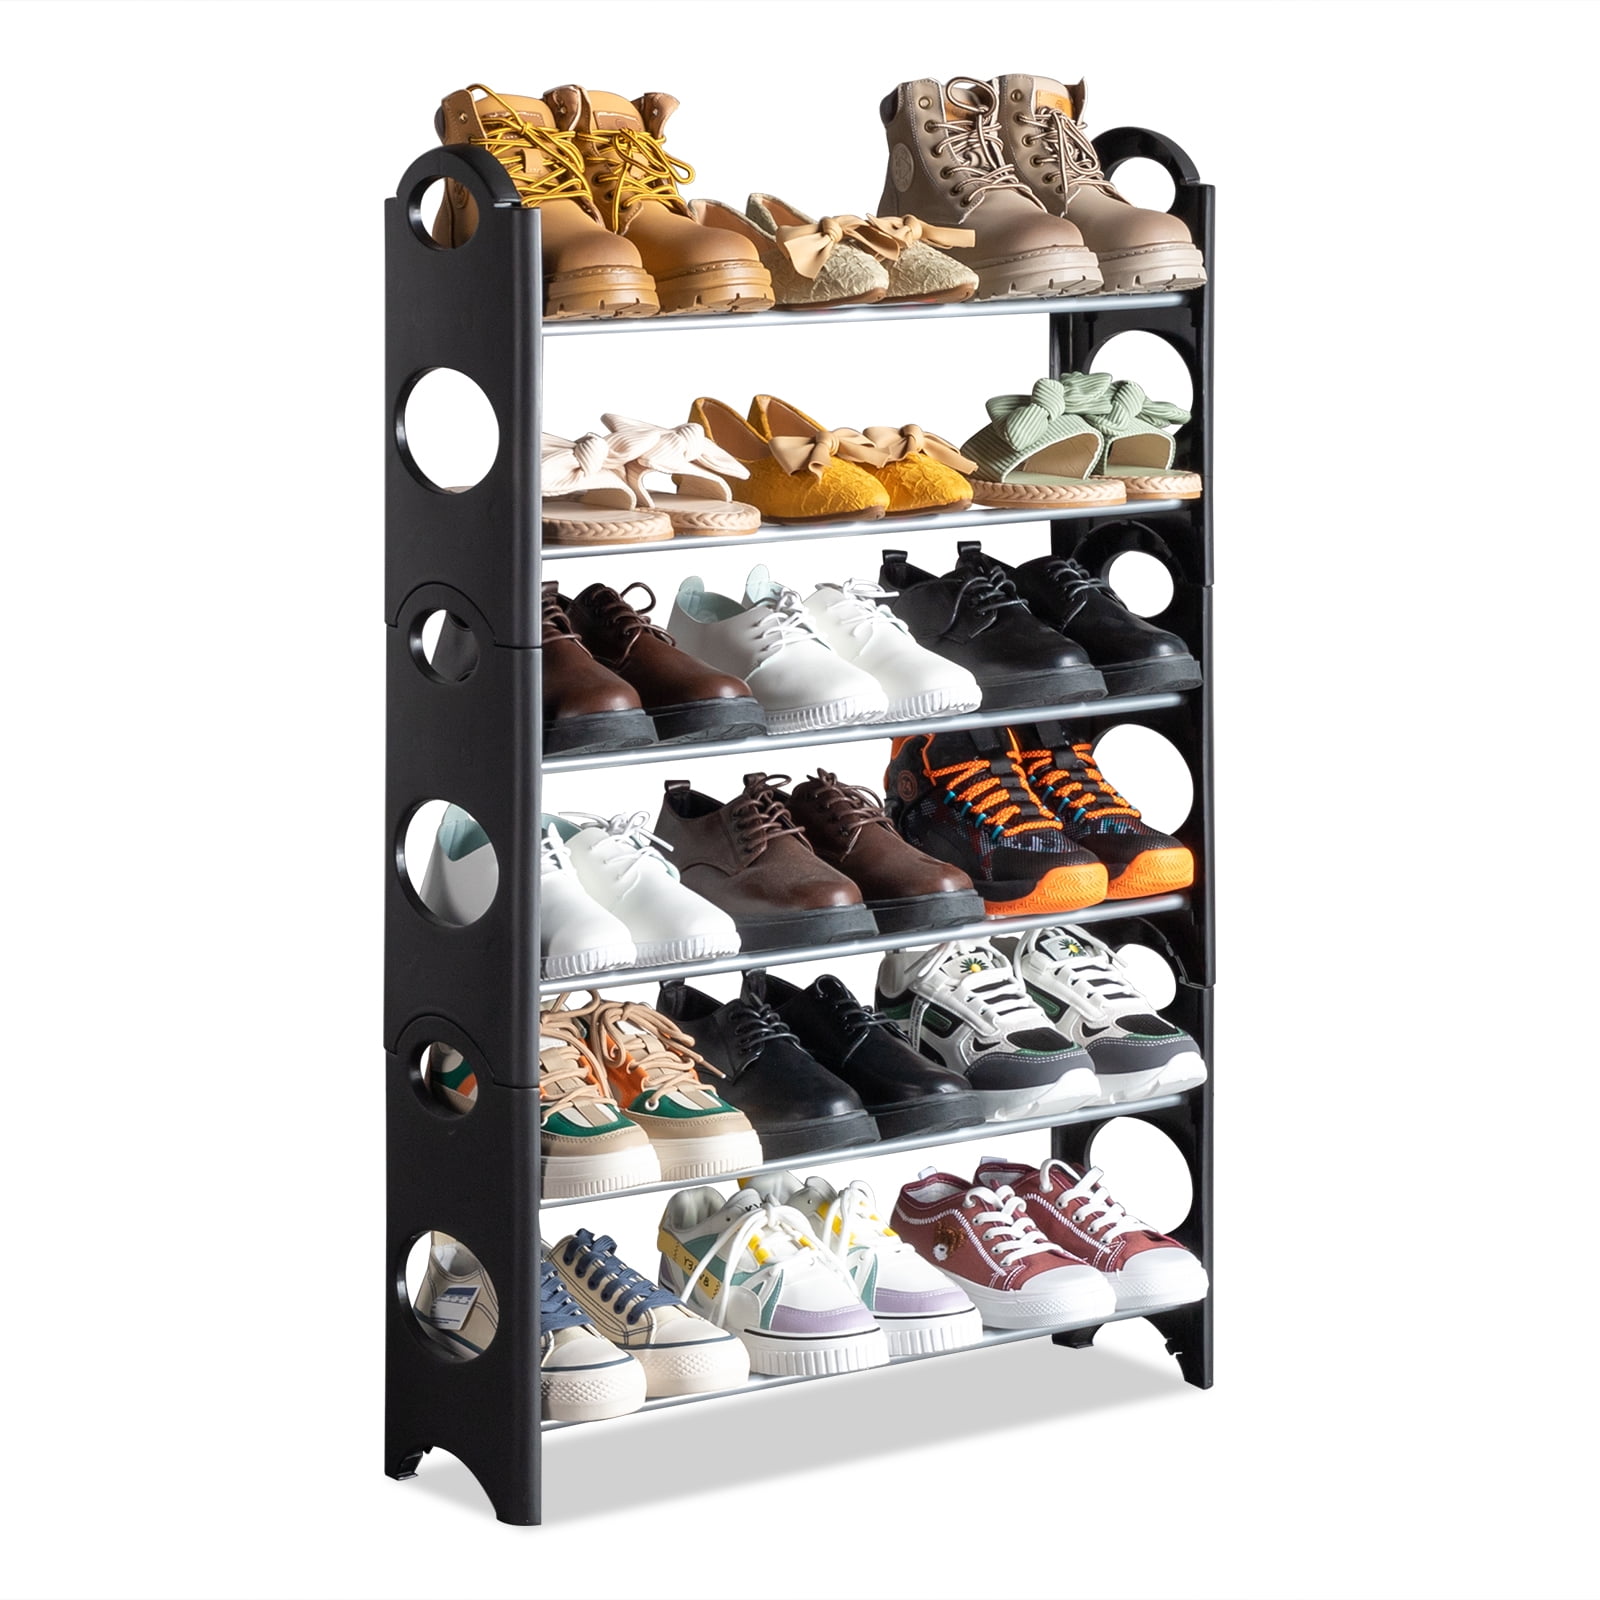 Ktaxon 5-Tier Shoe Rack, Metal Shoe Shelf, Storage Organizer Hold